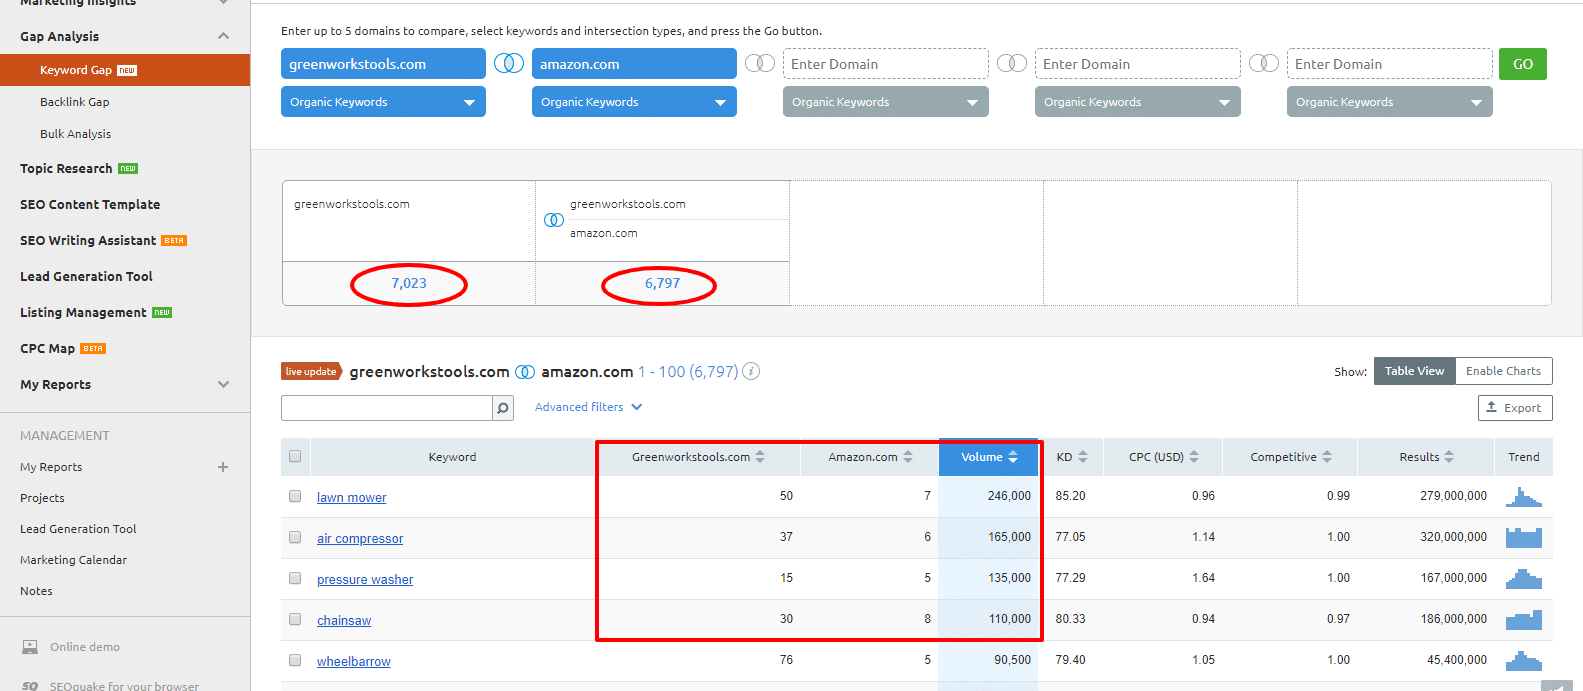 gap analysis versus amazon.com